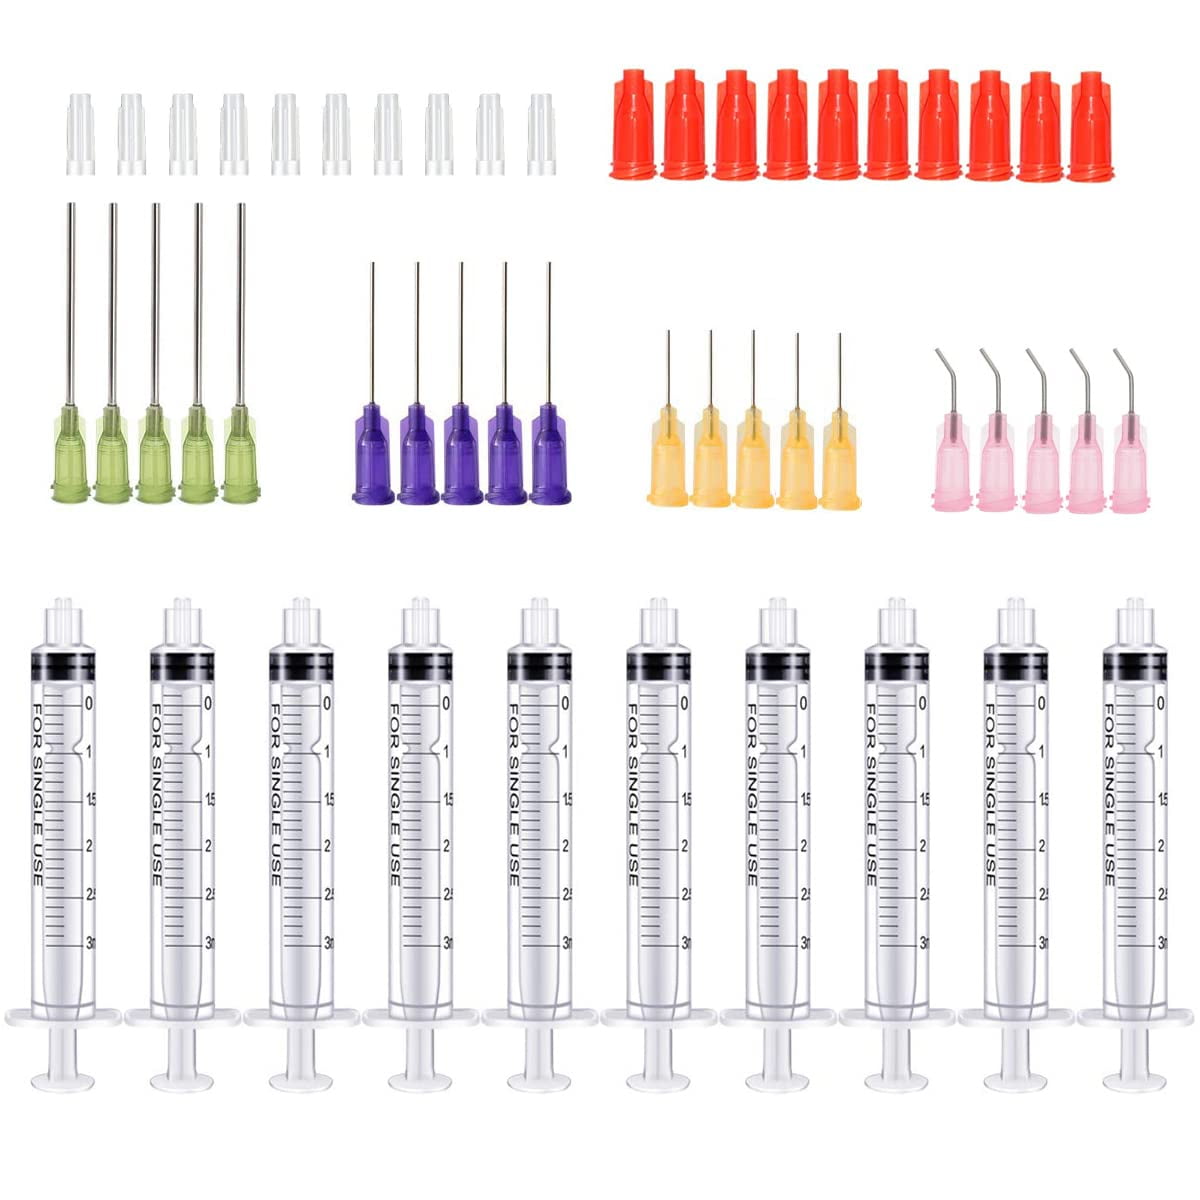 Turba 3ML Plastic Syringe, 18g 1 Blunt, 23g 1 Safety Cover, 100ct (I –  Preferred Medical Plus